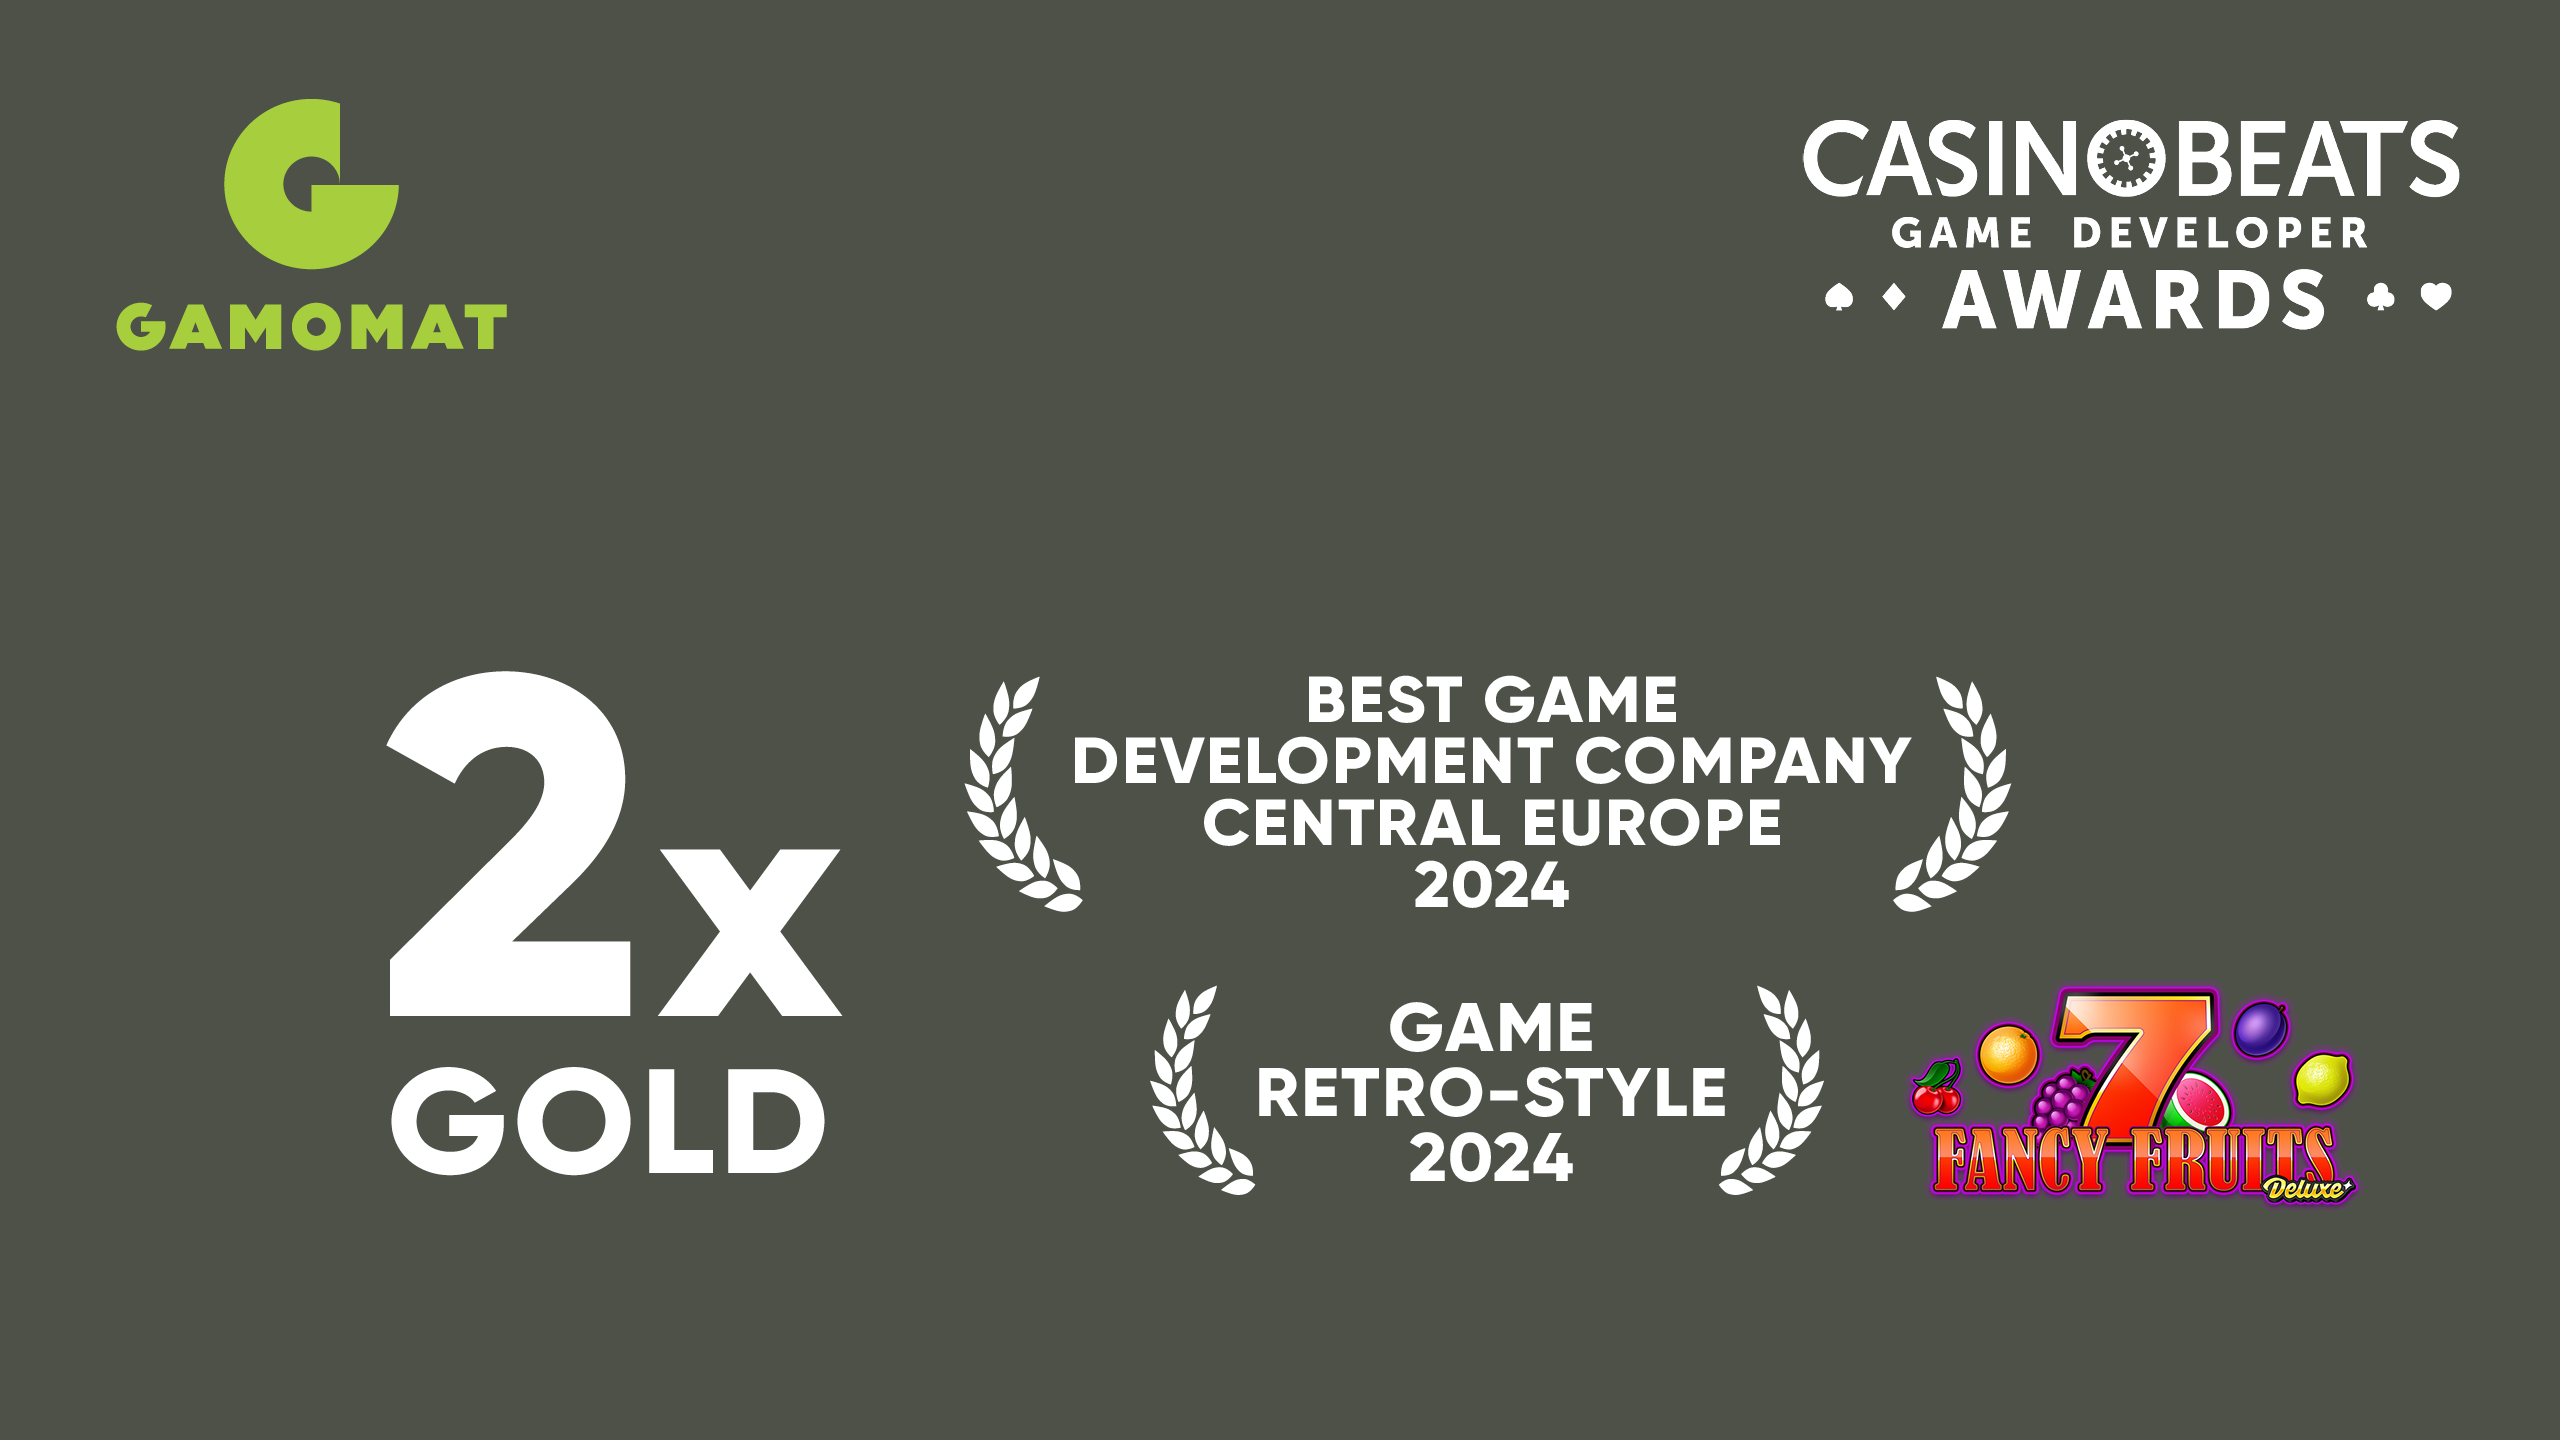 GAMOMAT celebrates double gold at the CasinoBeats Game Developer Awards 2024